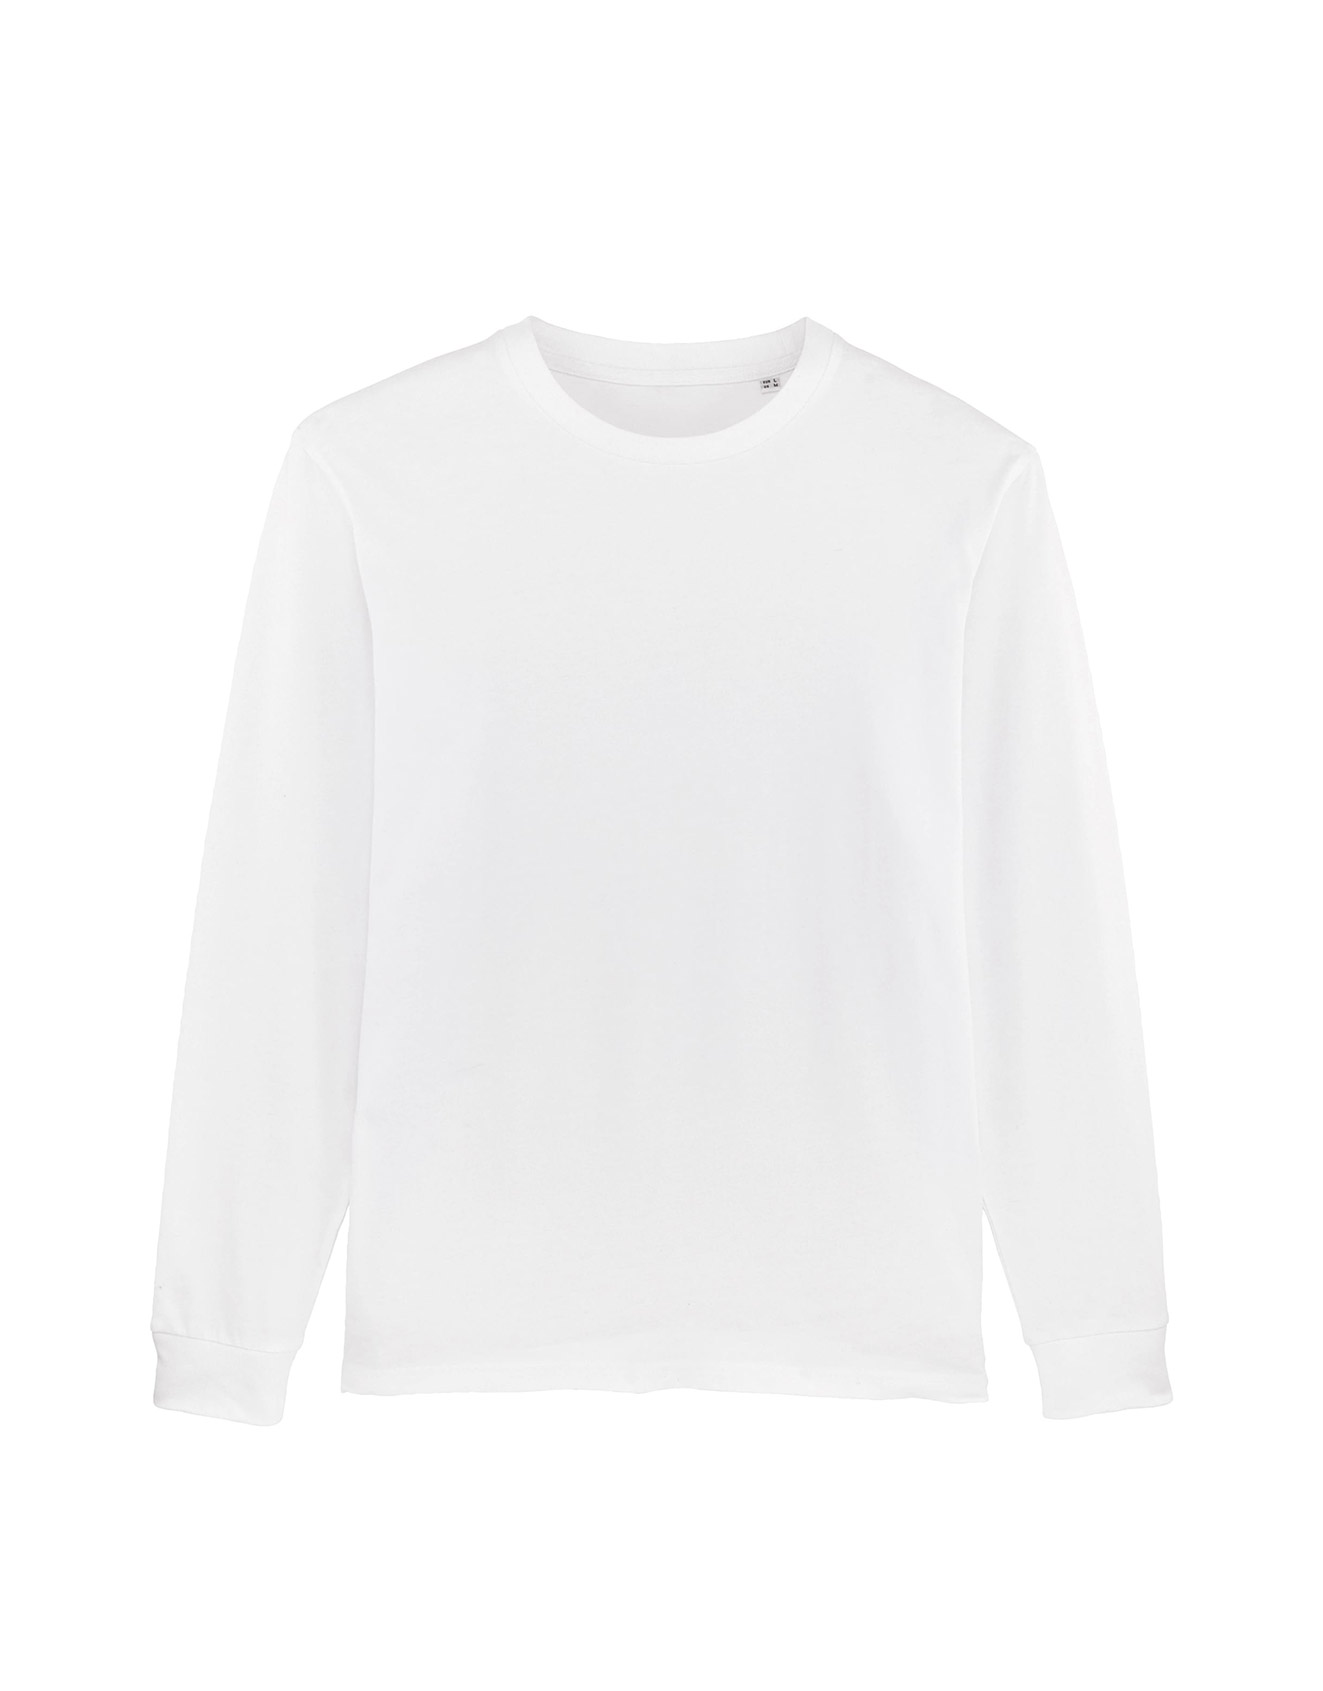 STANLEY/STELLA – Shifts Dry unisex long sleeve t-shirt